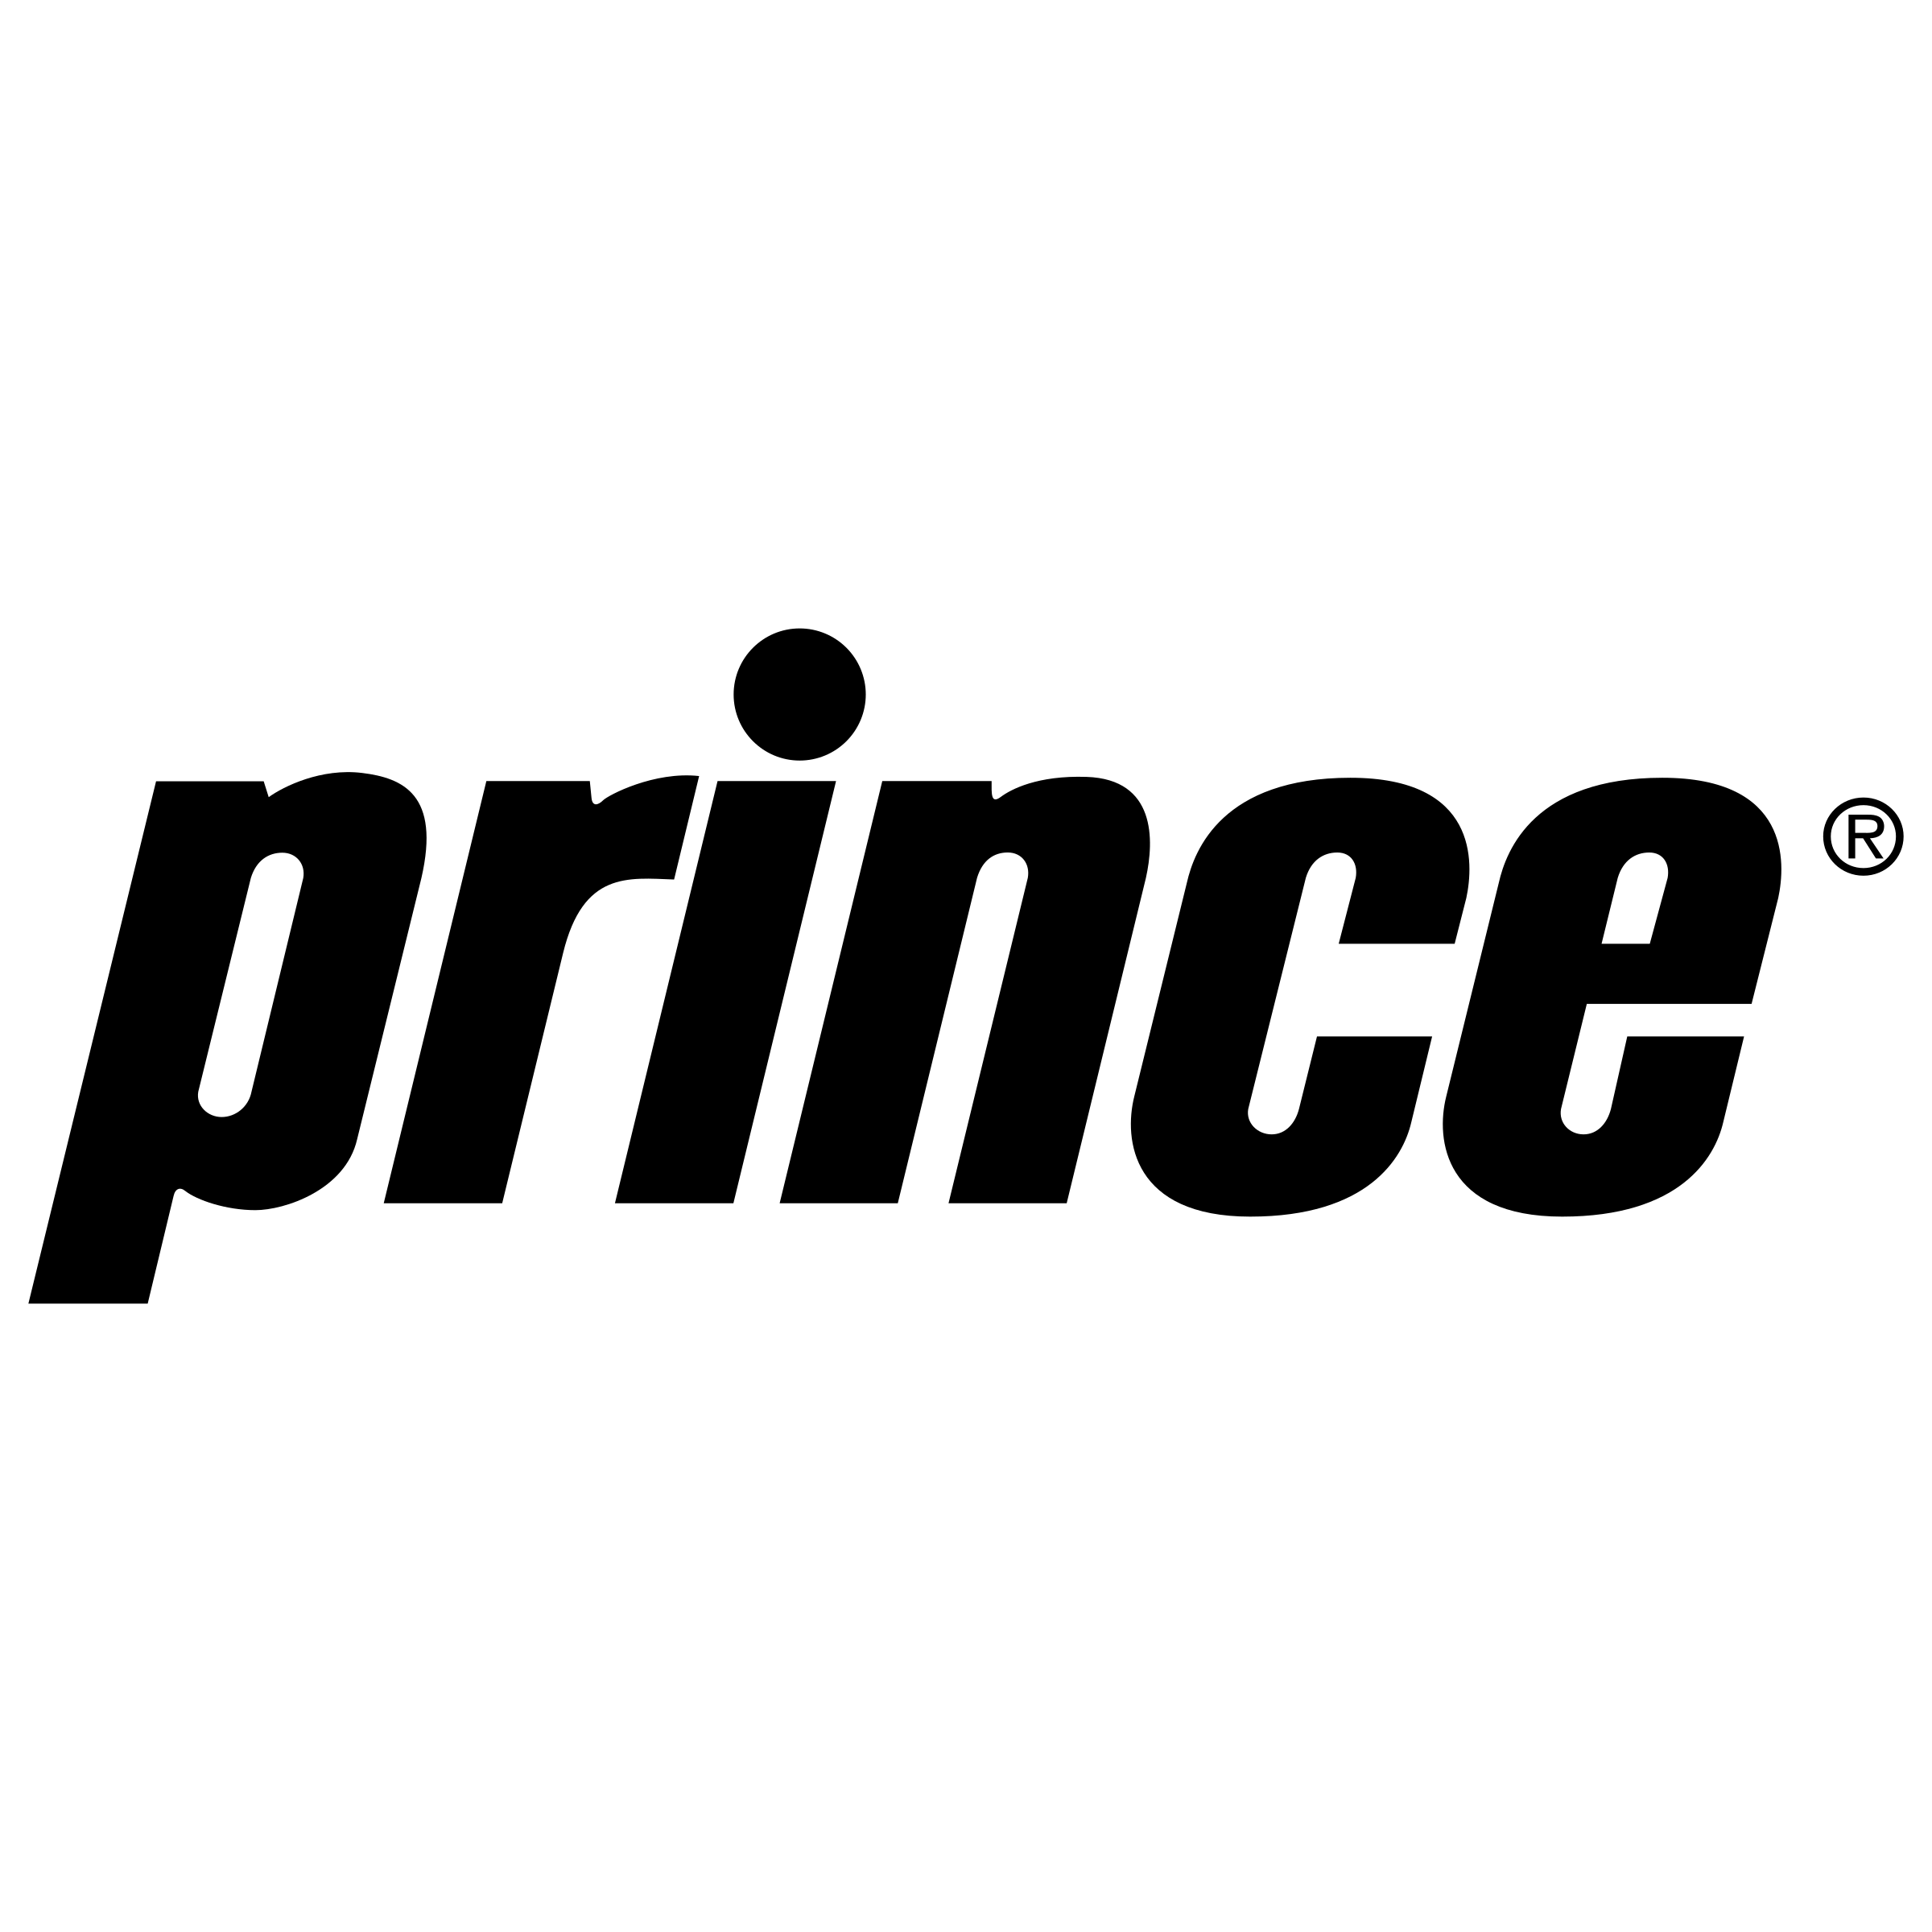 Prince Logo - Prince Logo PNG Transparent & SVG Vector - Freebie Supply